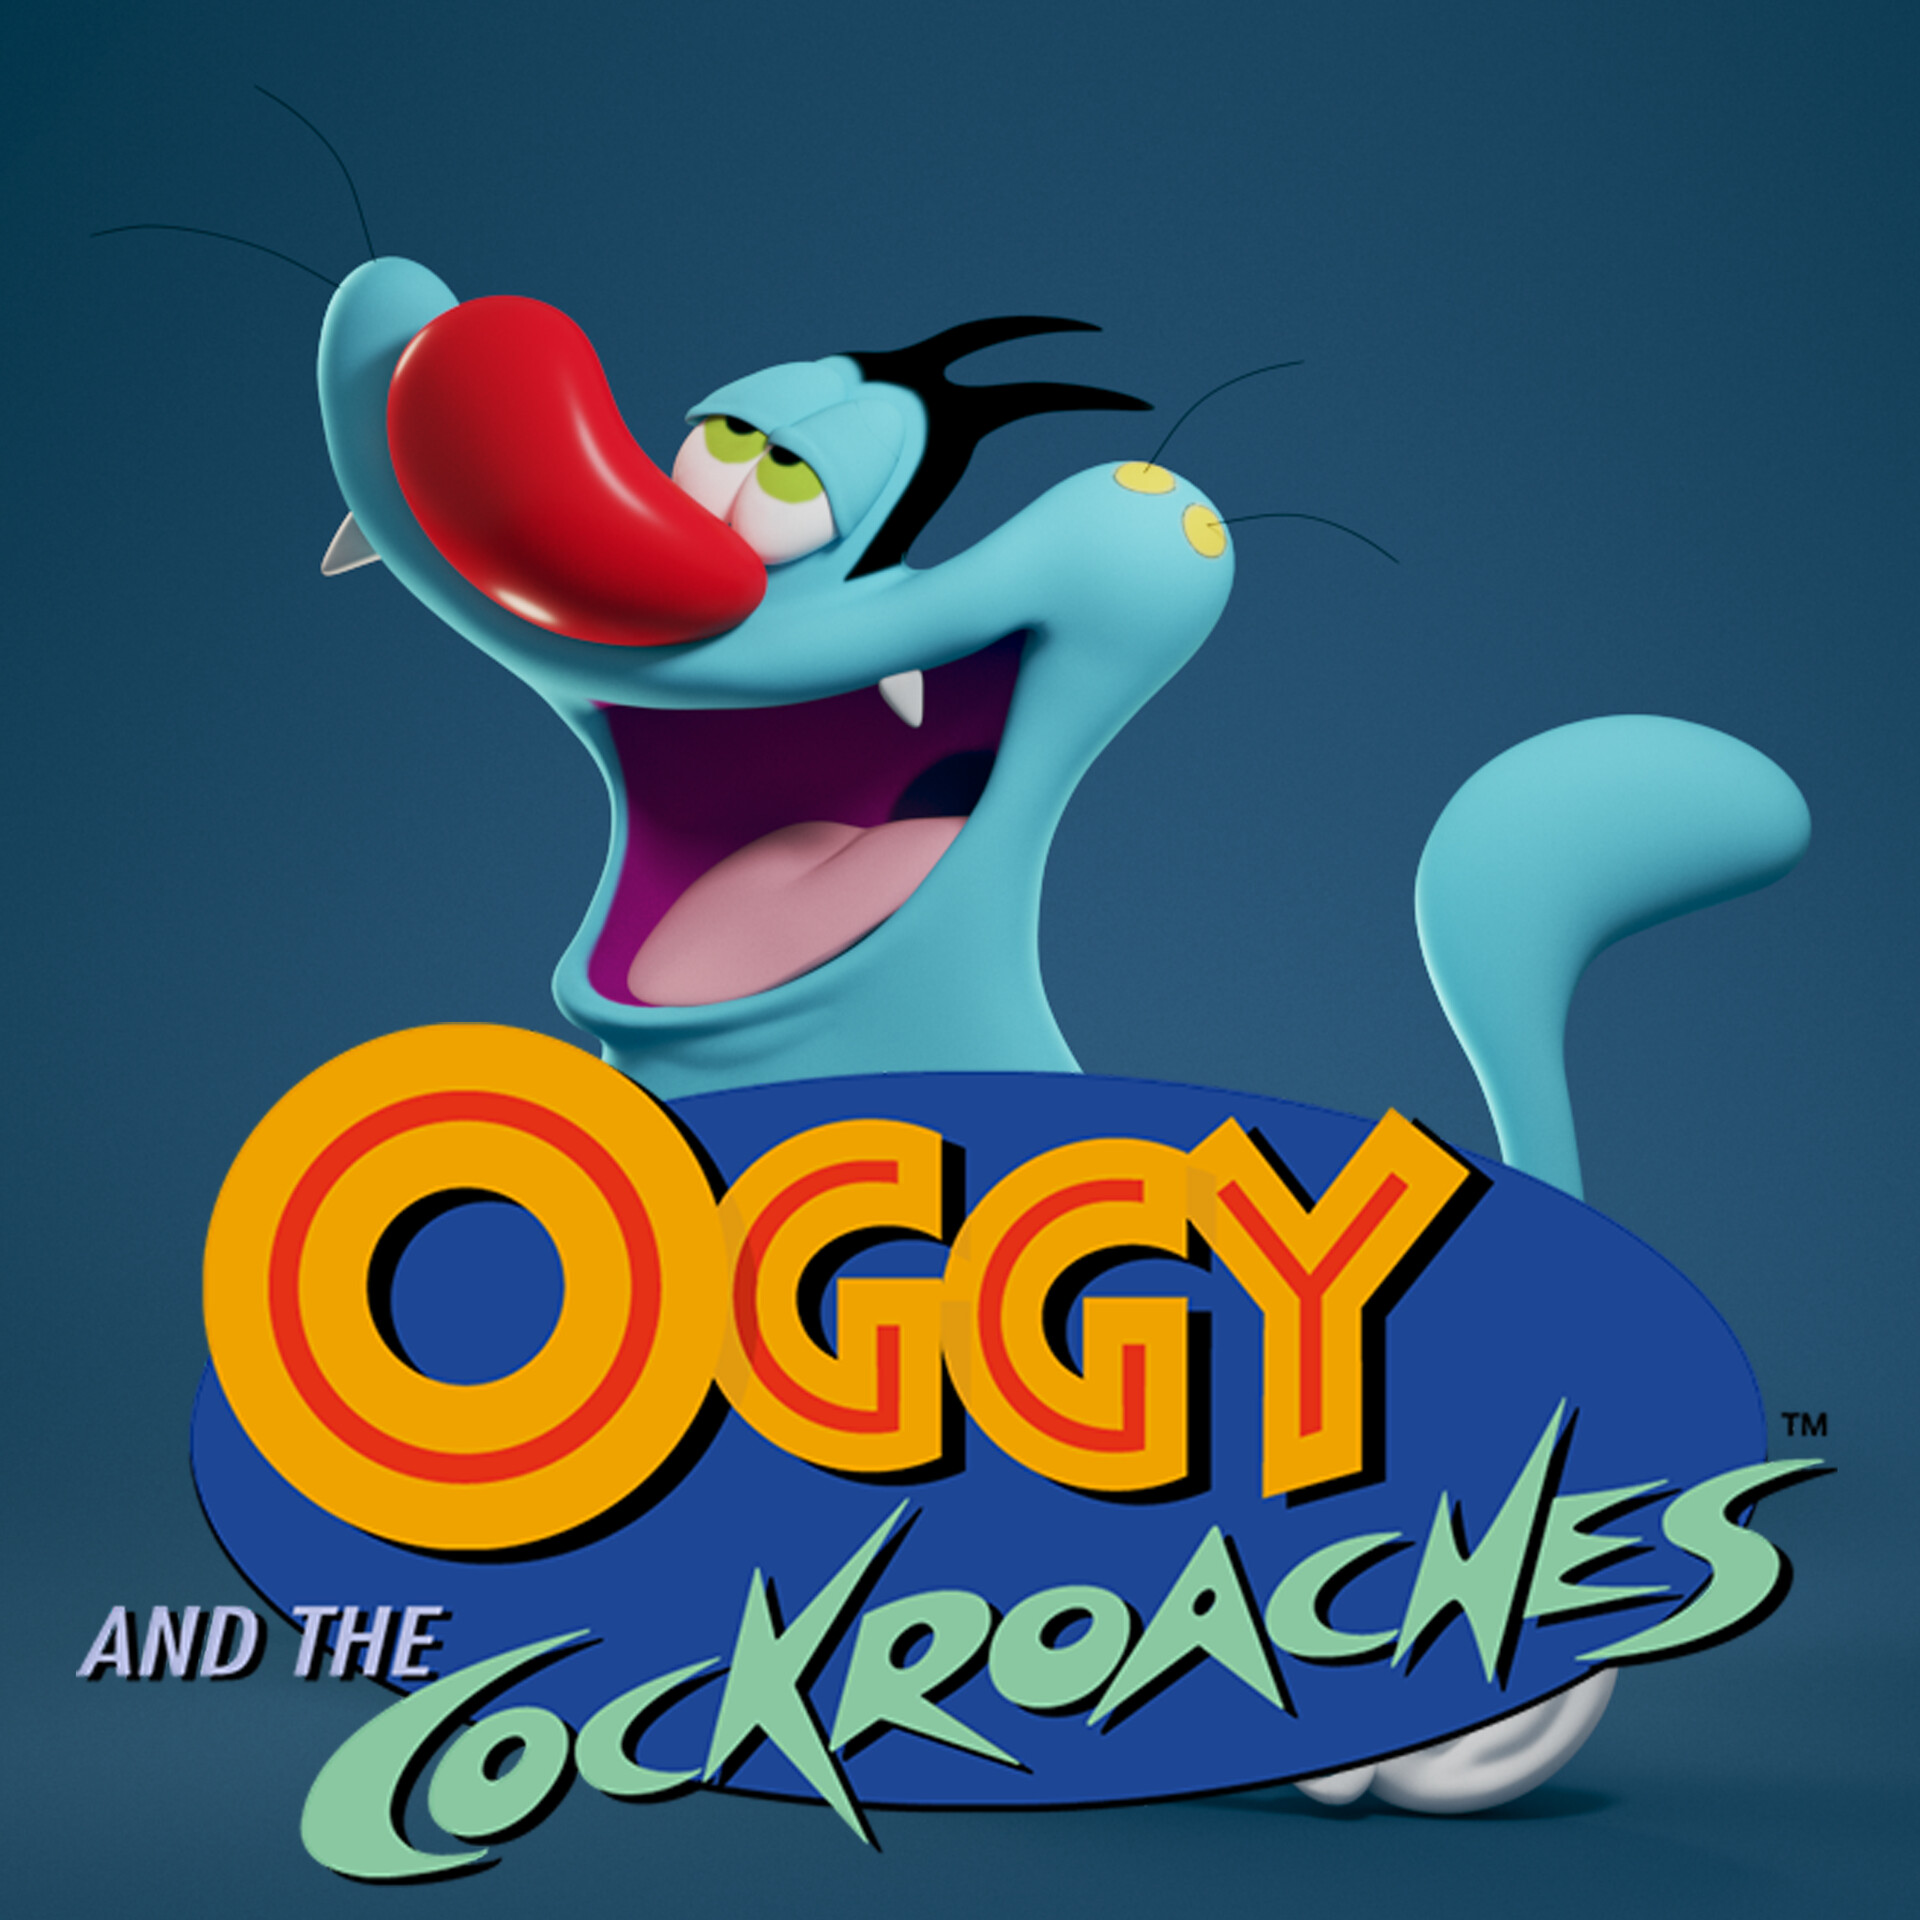 OGGY20 Logo by C5000-MakesStuff on DeviantArt